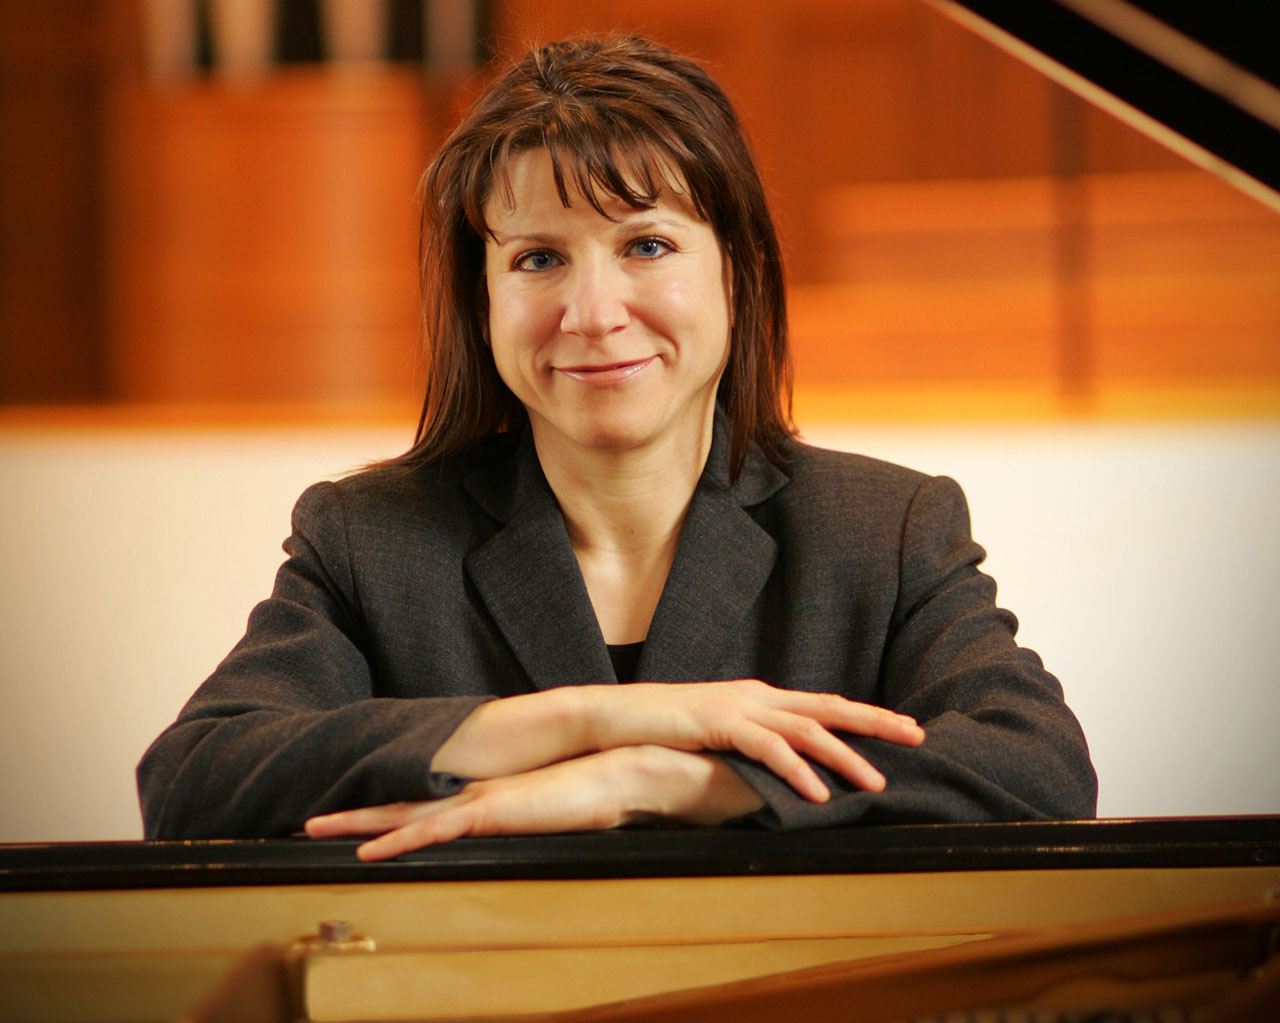 Pianist Jeri-Mae G. Astolfi will be presenting Women in Music: 19th-21st Centuries